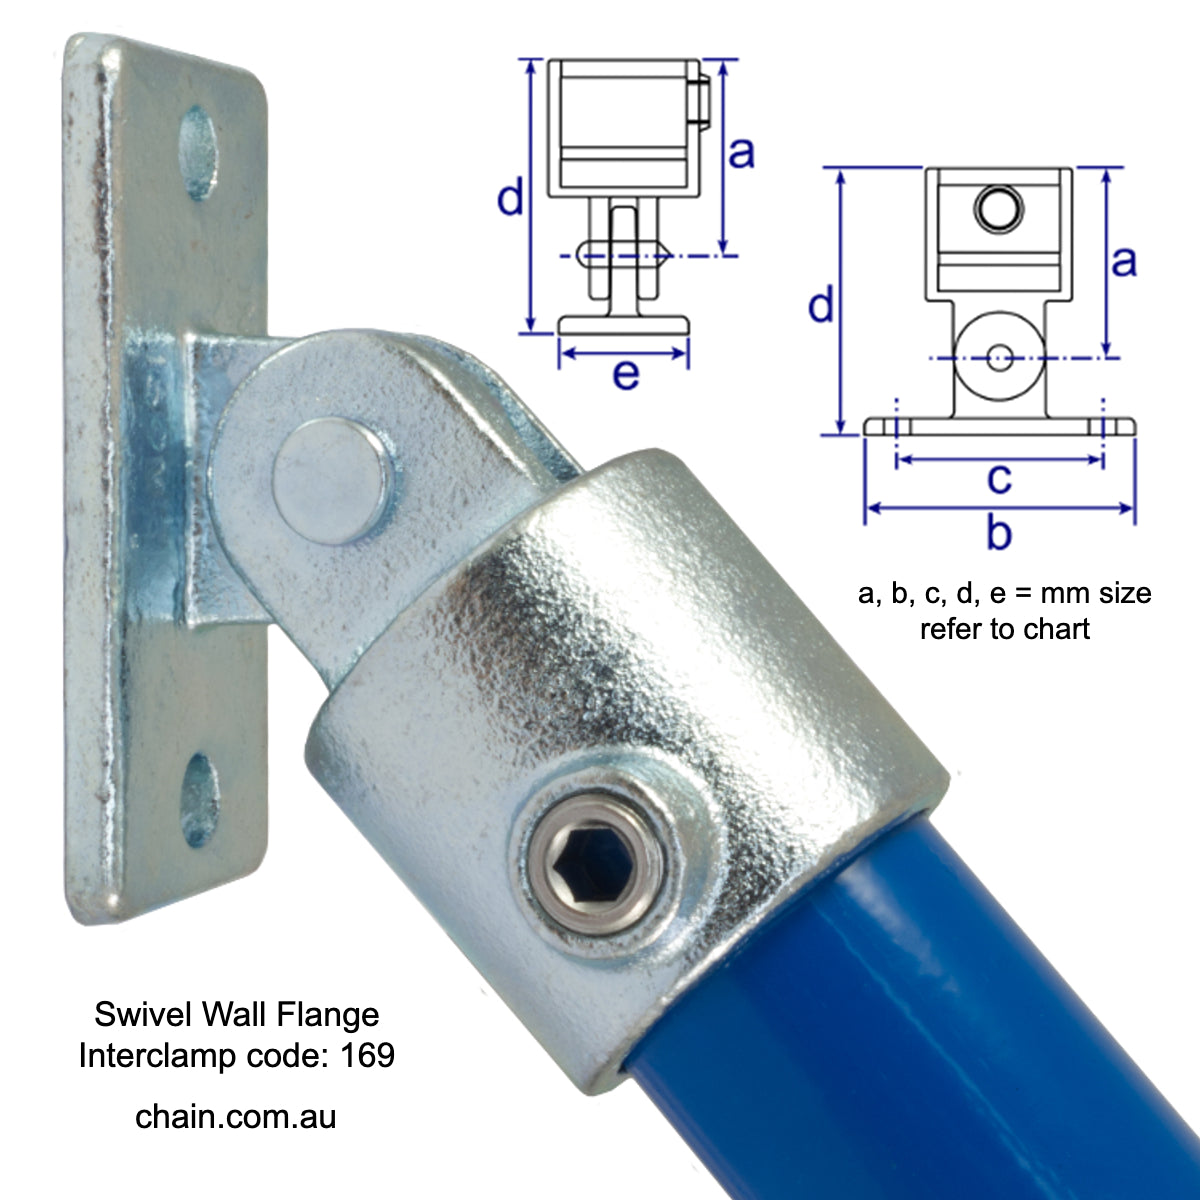 Swivel Base Flange (Swivel Wall Flange) for Galvanised Pipe (Interclamp Code 169). Shop chain.com.au. Australia wide shipping.